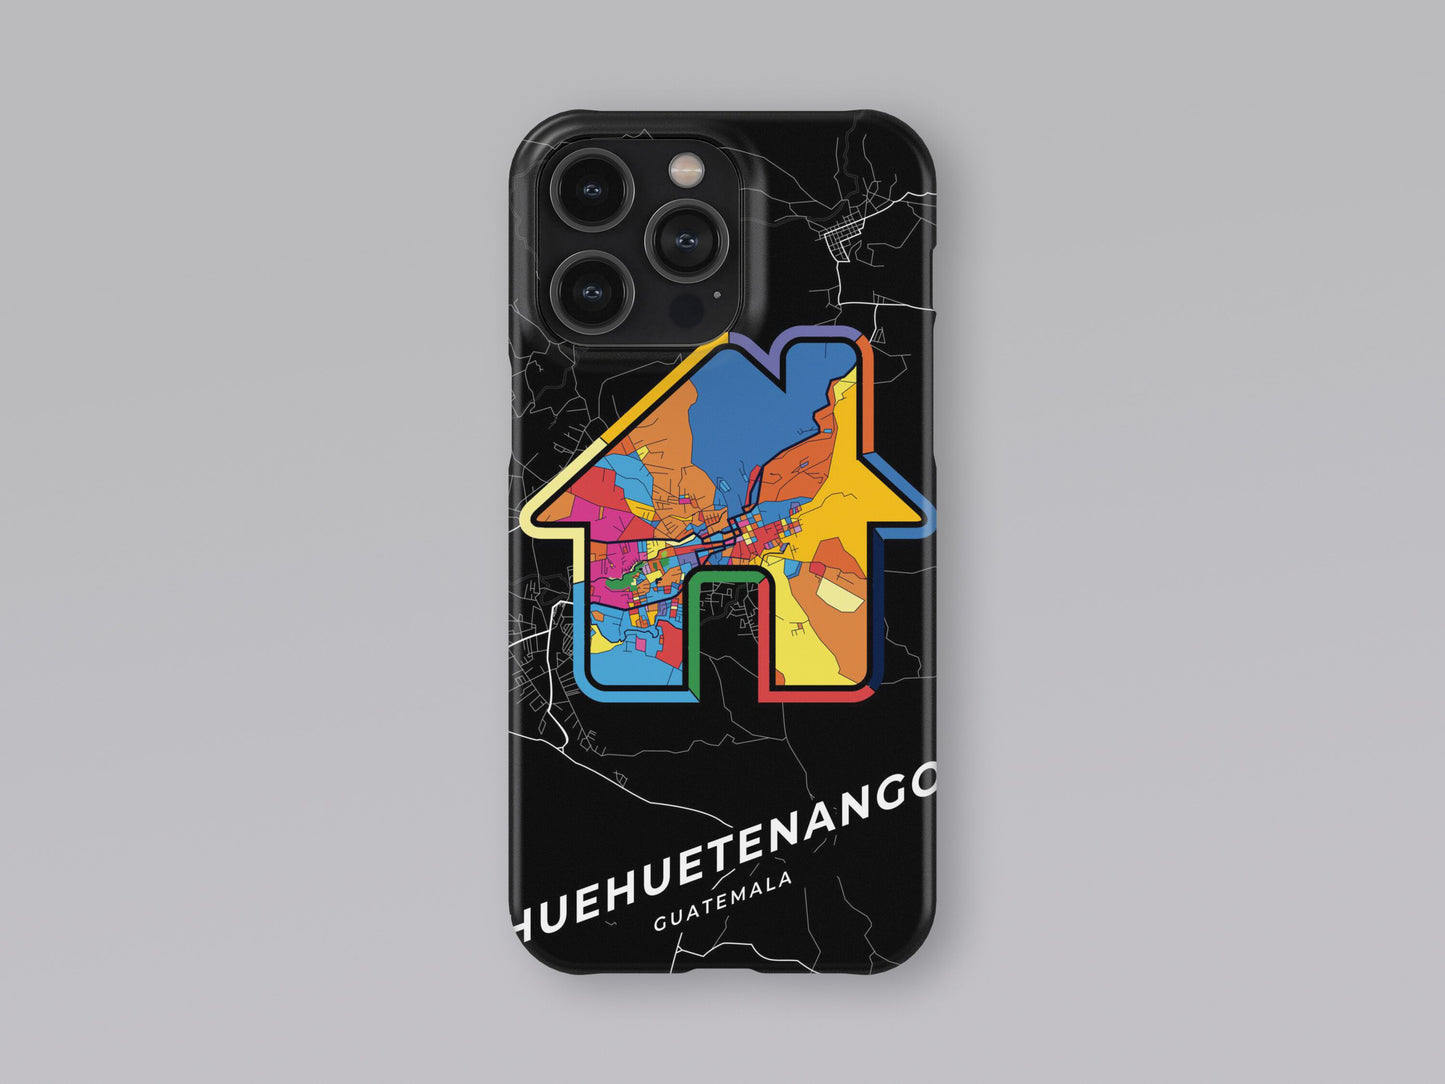 Huehuetenango Guatemala slim phone case with colorful icon. Birthday, wedding or housewarming gift. Couple match cases. 3